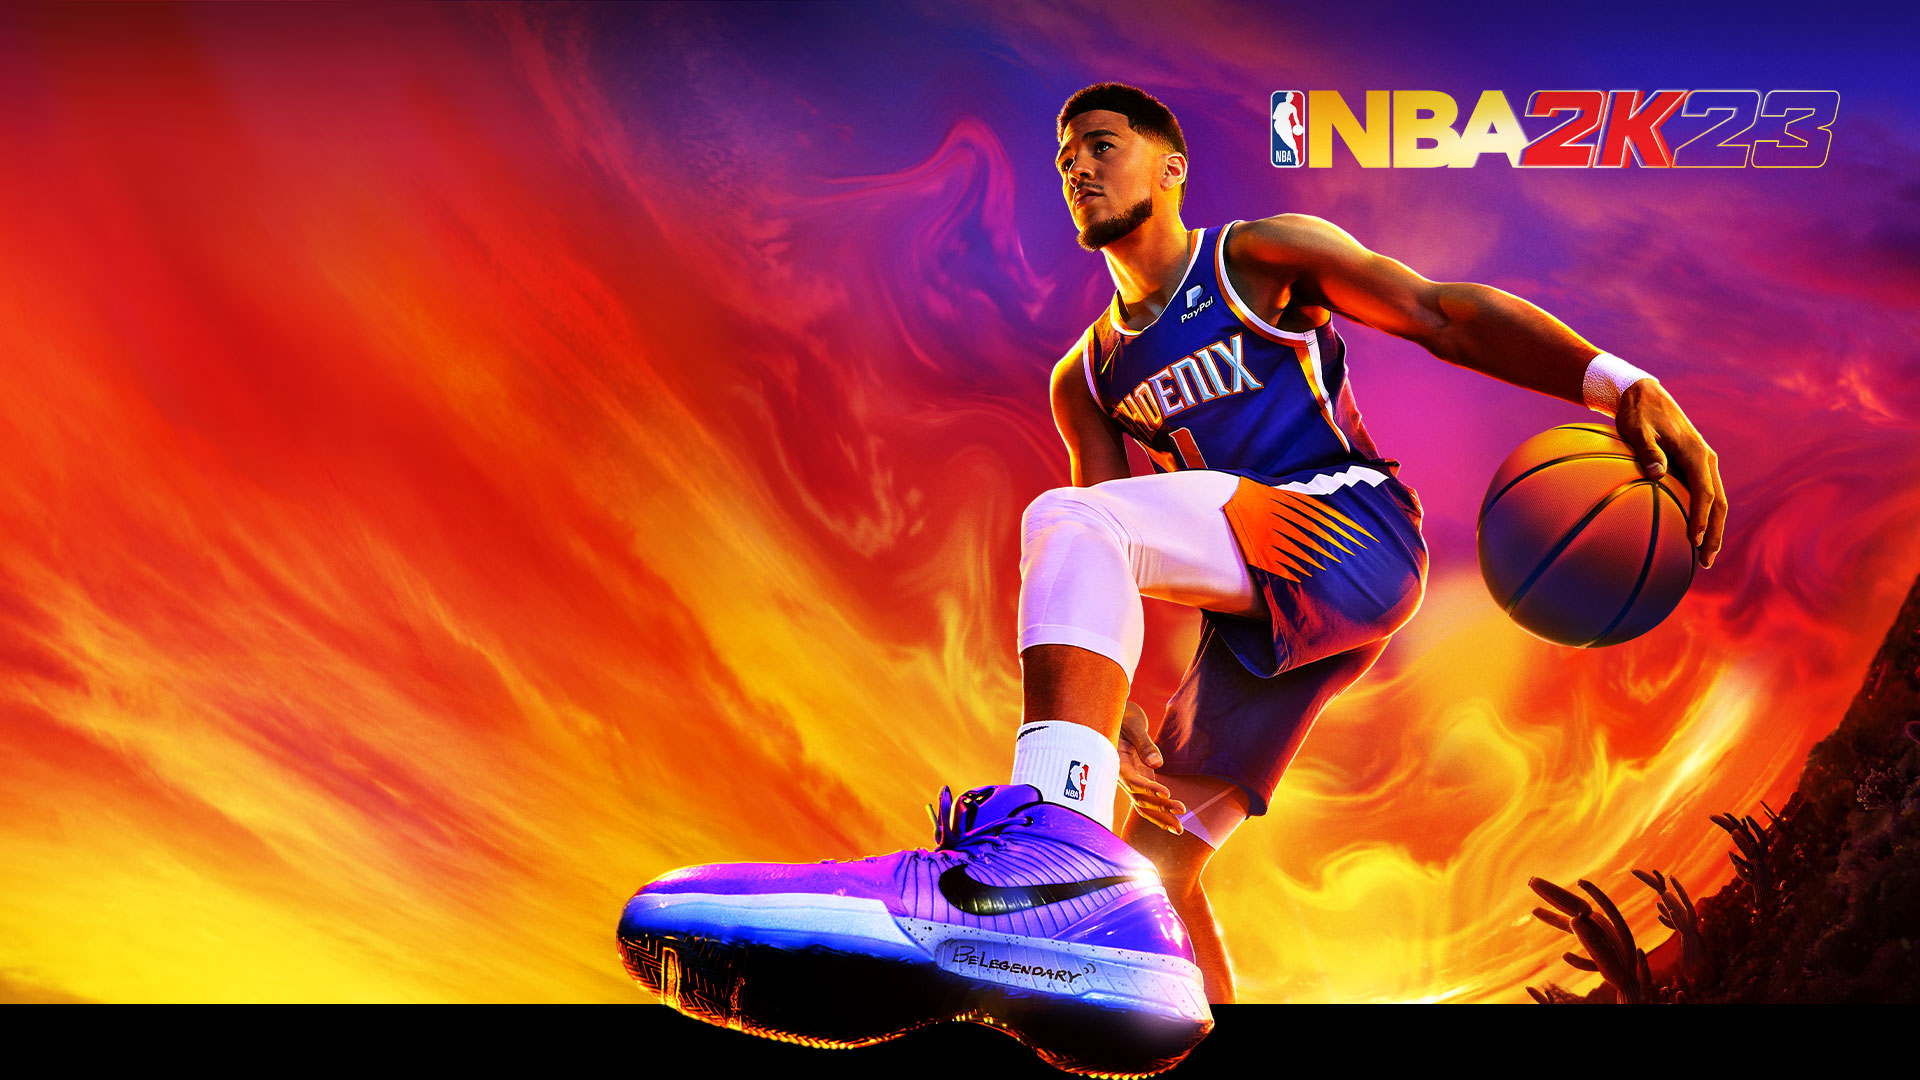 NBA 2K23, Devin Booker, nummer 1 for Phoenix Suns, dribler en basketball under en fargerik ørkenhimmel.